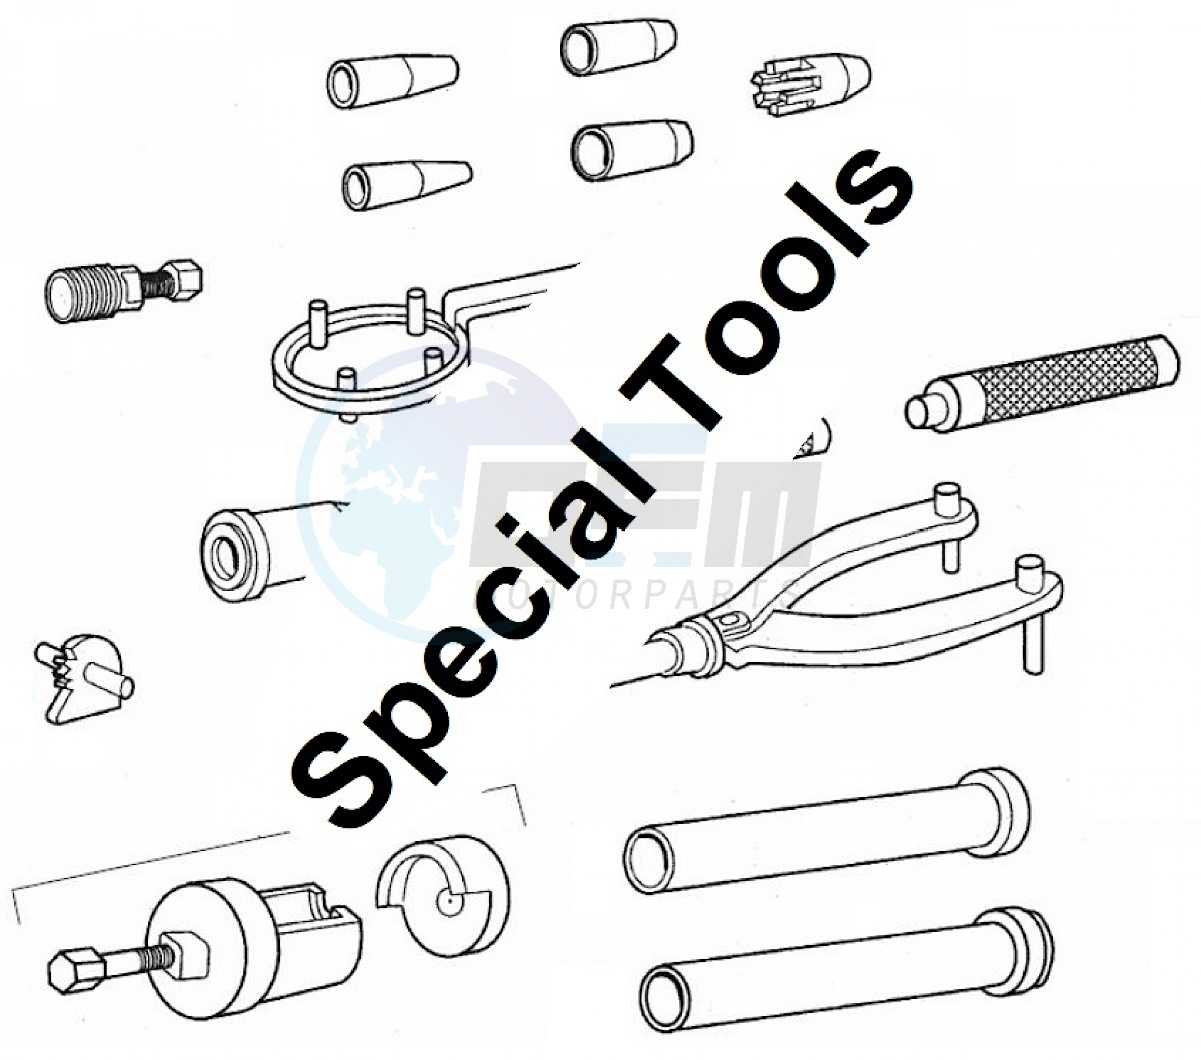 Tools (Positions) blueprint